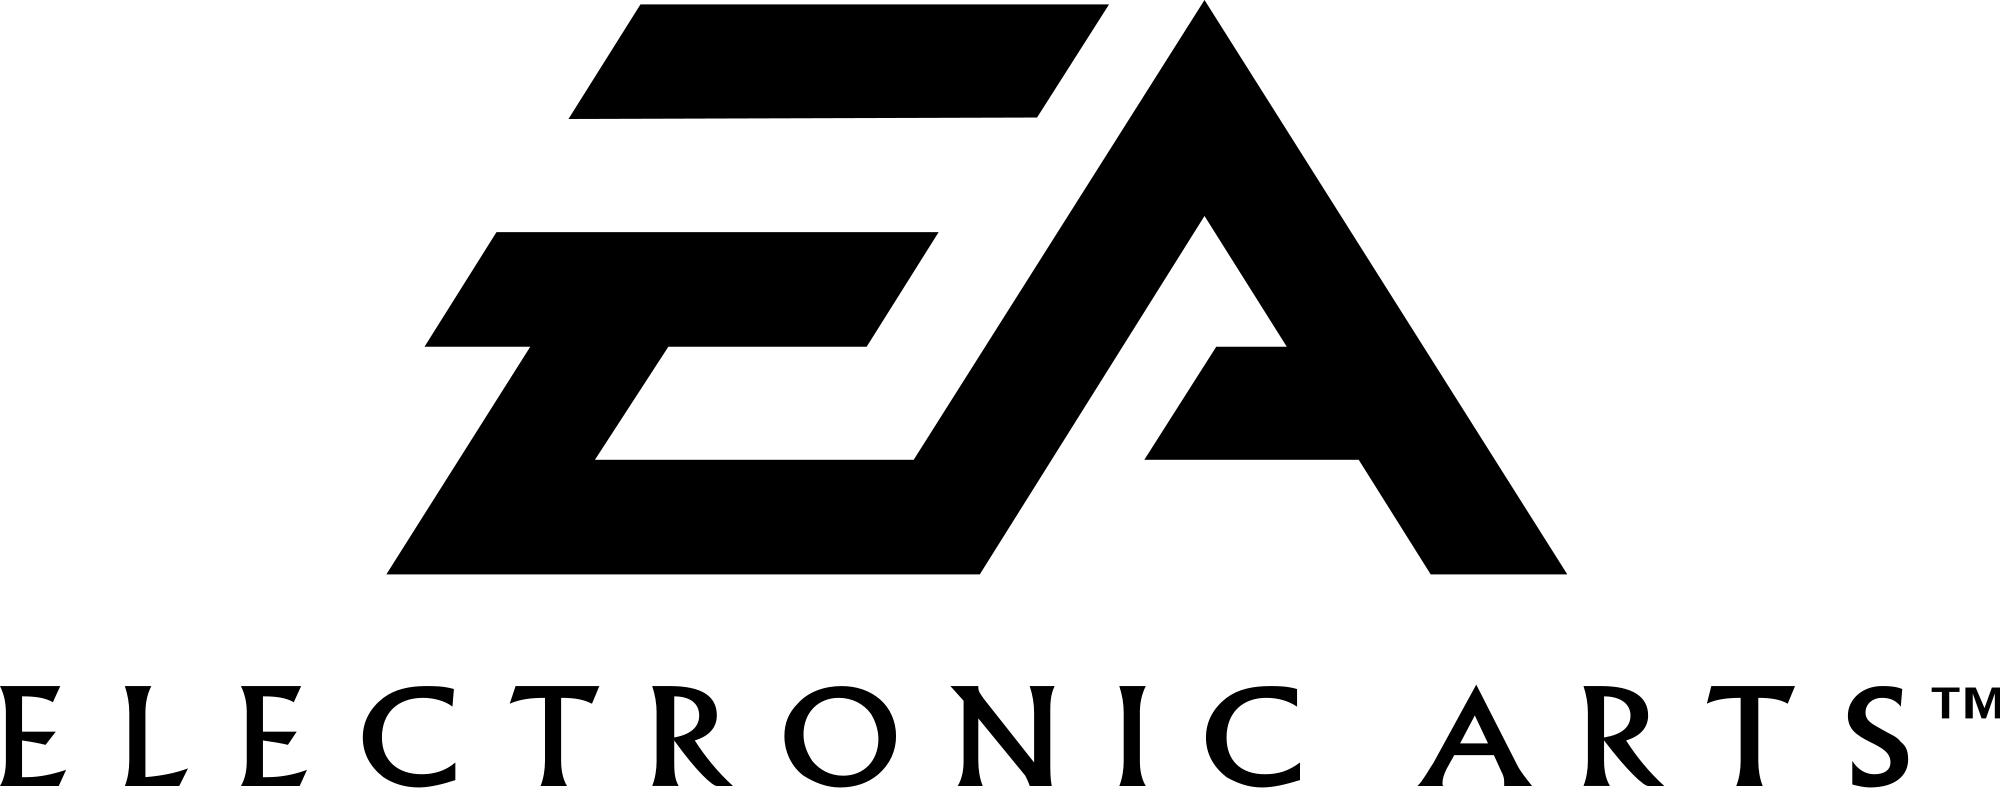 Black Electronic Logo - Electronic Arts logo black.svg